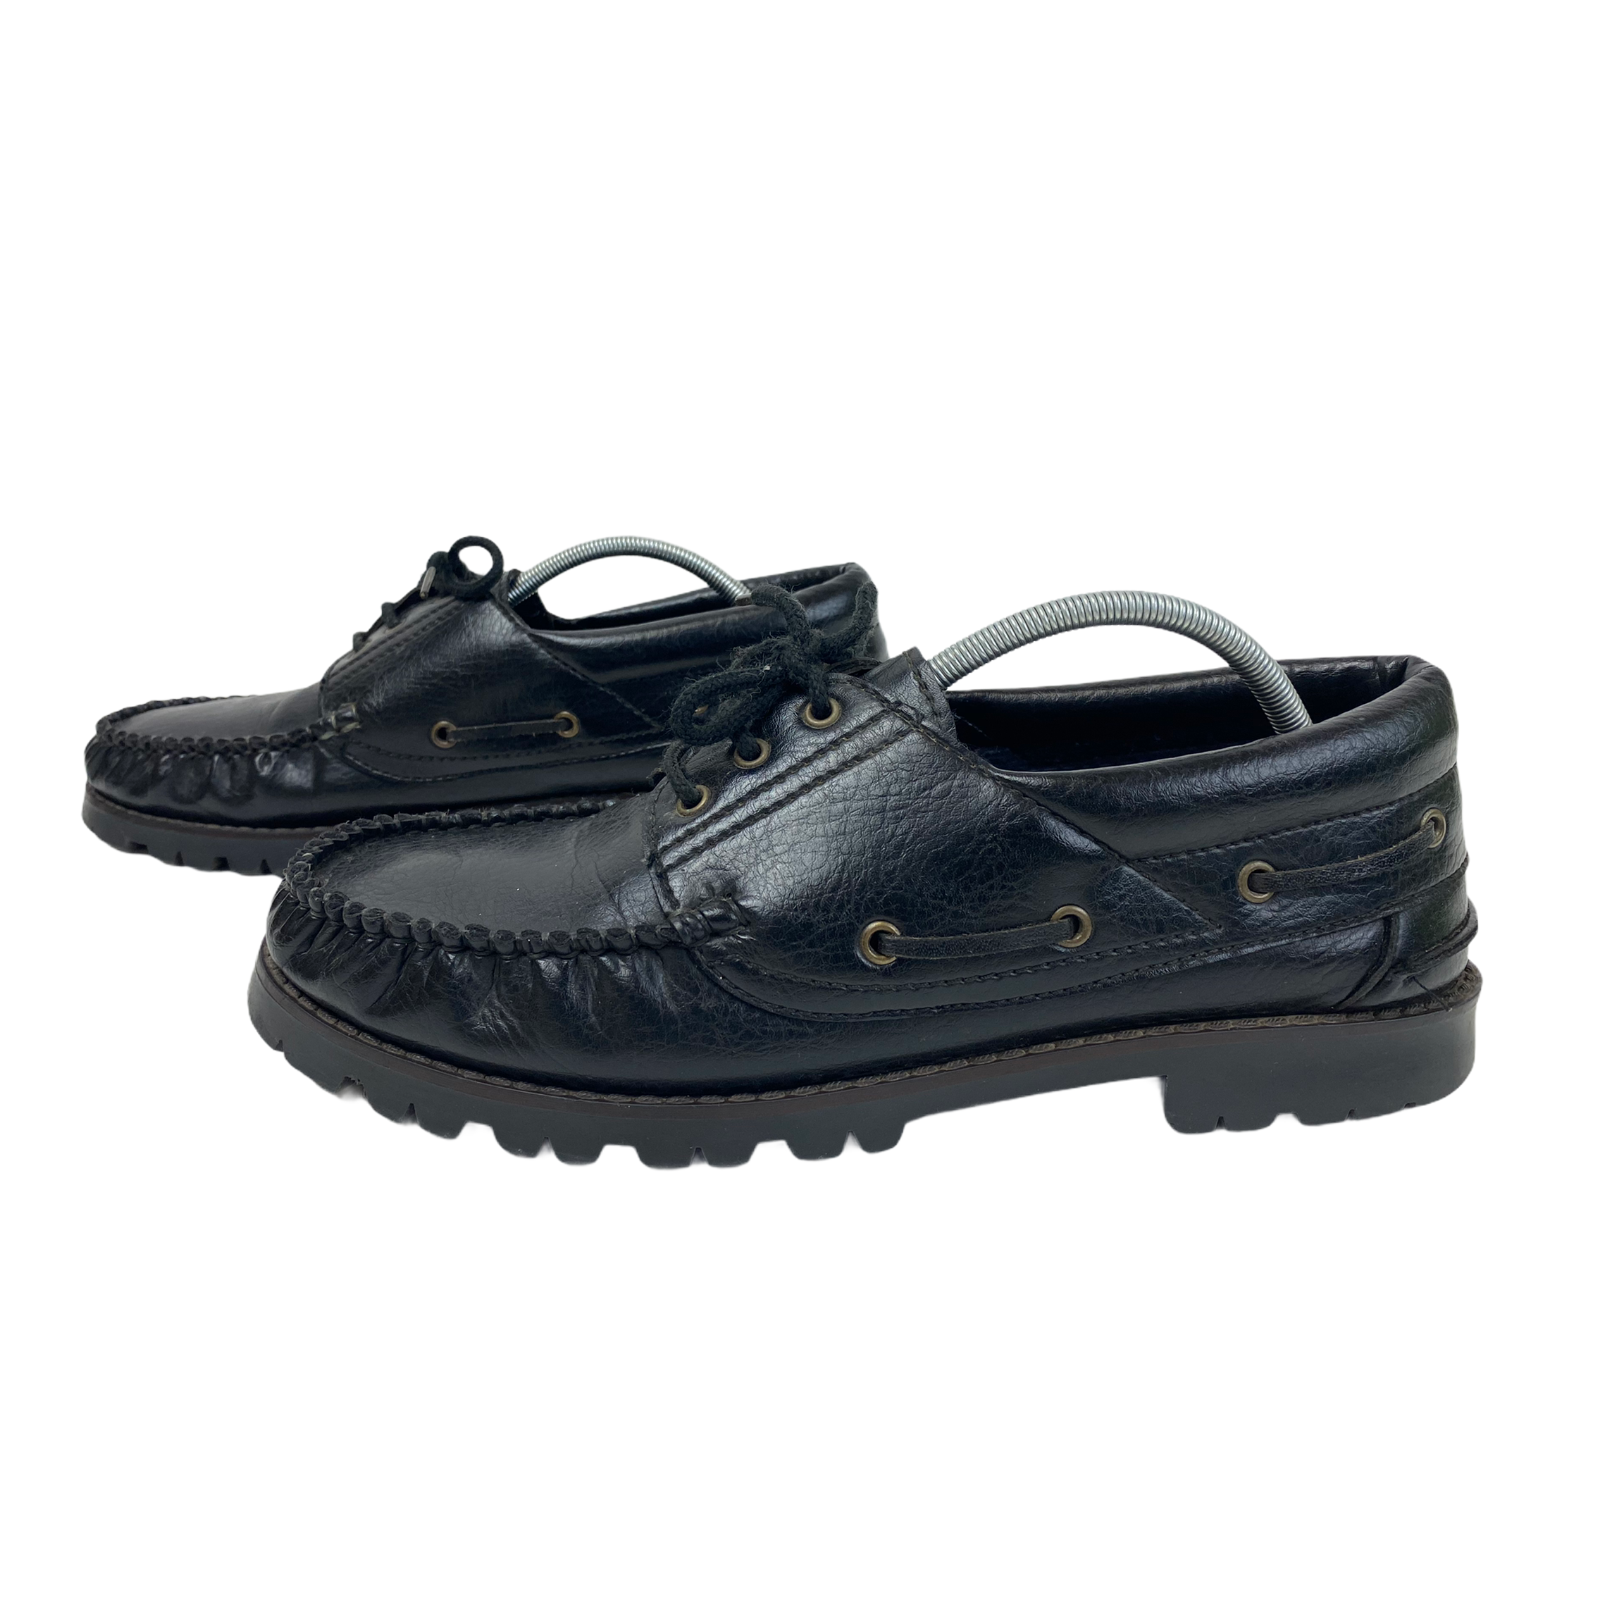 QUALITY Mens Finally popular brand Shoes Size UK 8.5 EU 42.5 Deck Black S Boat Leather Sales